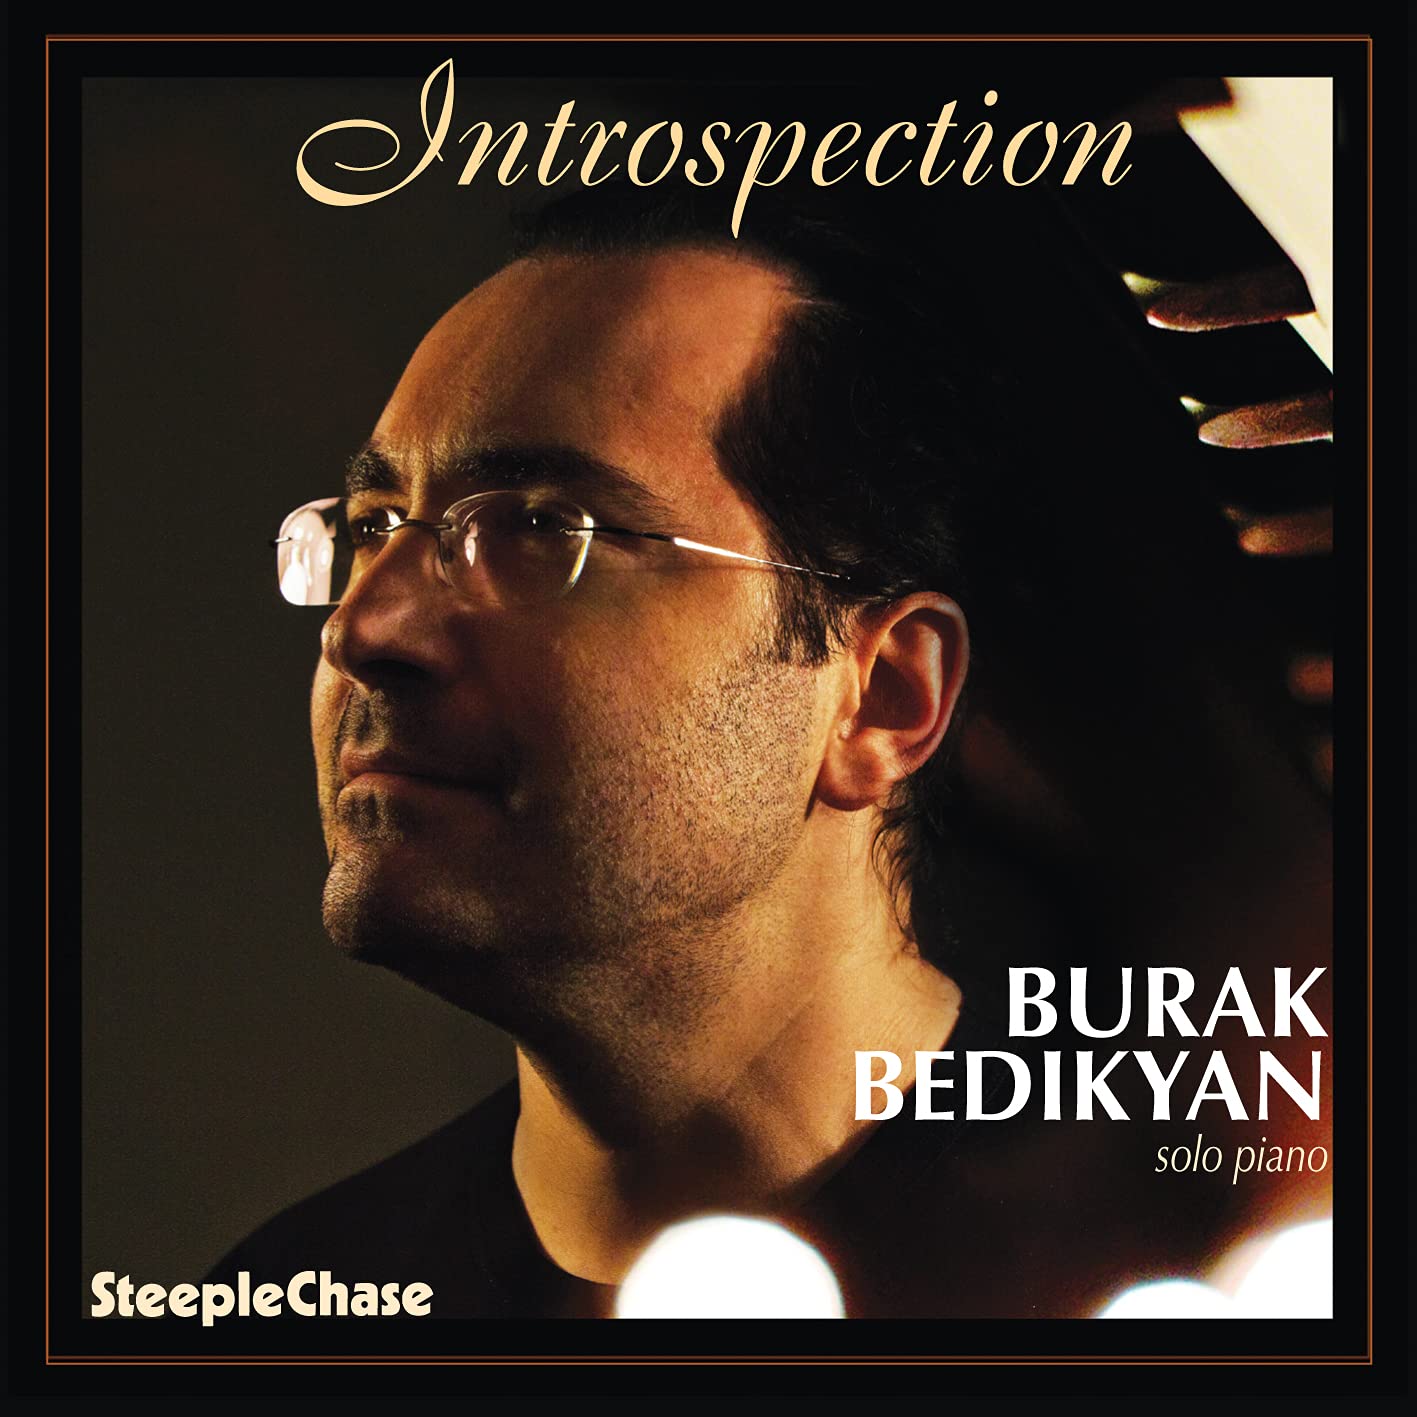 BURAK BEDIKYAN - Introspection cover 